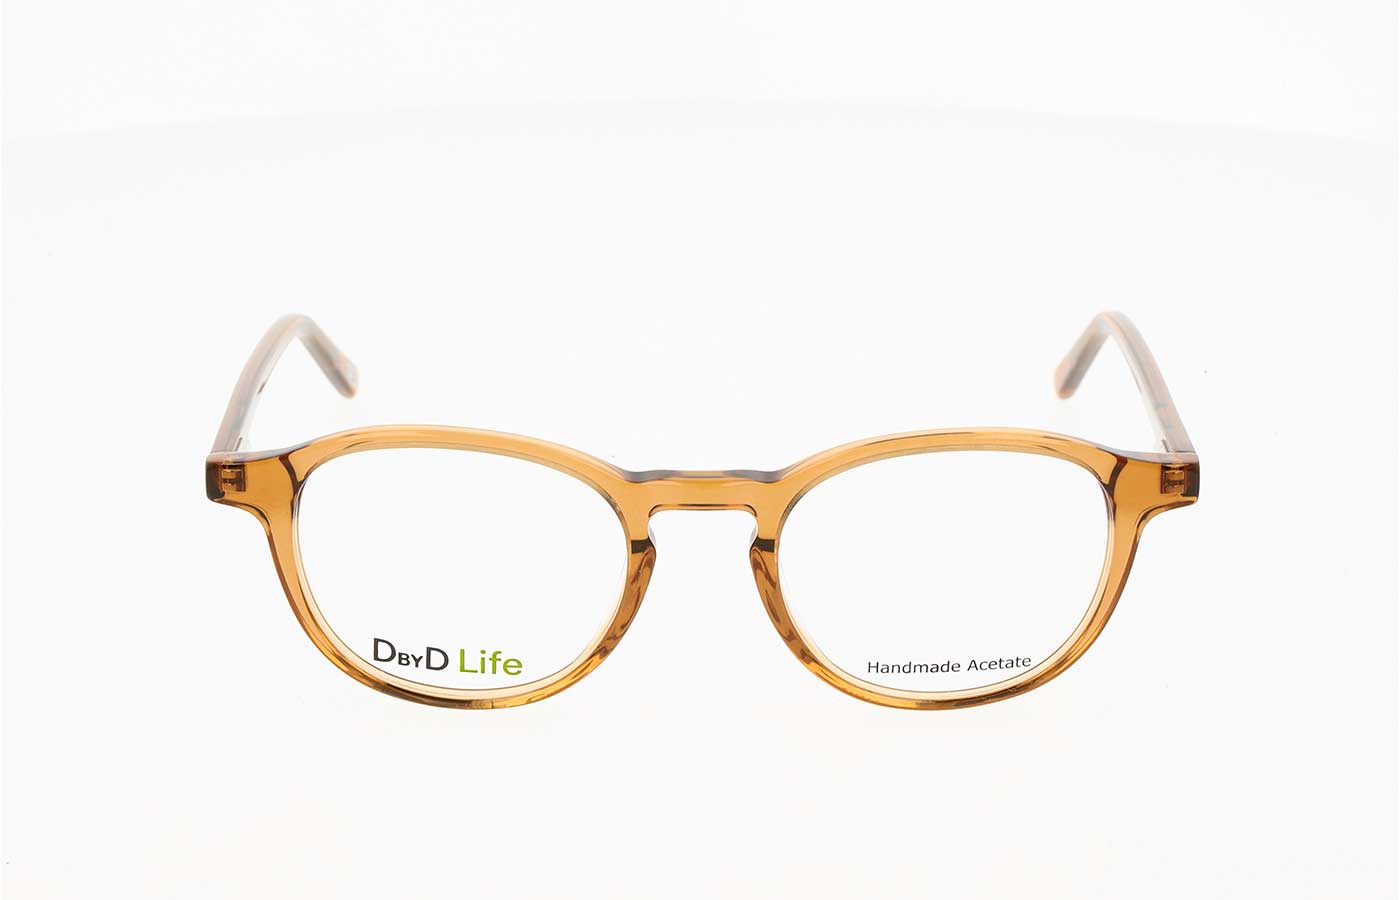 Vista-1 - Gafas oftálmicas DbyD DBJU08 Mujer Color Café